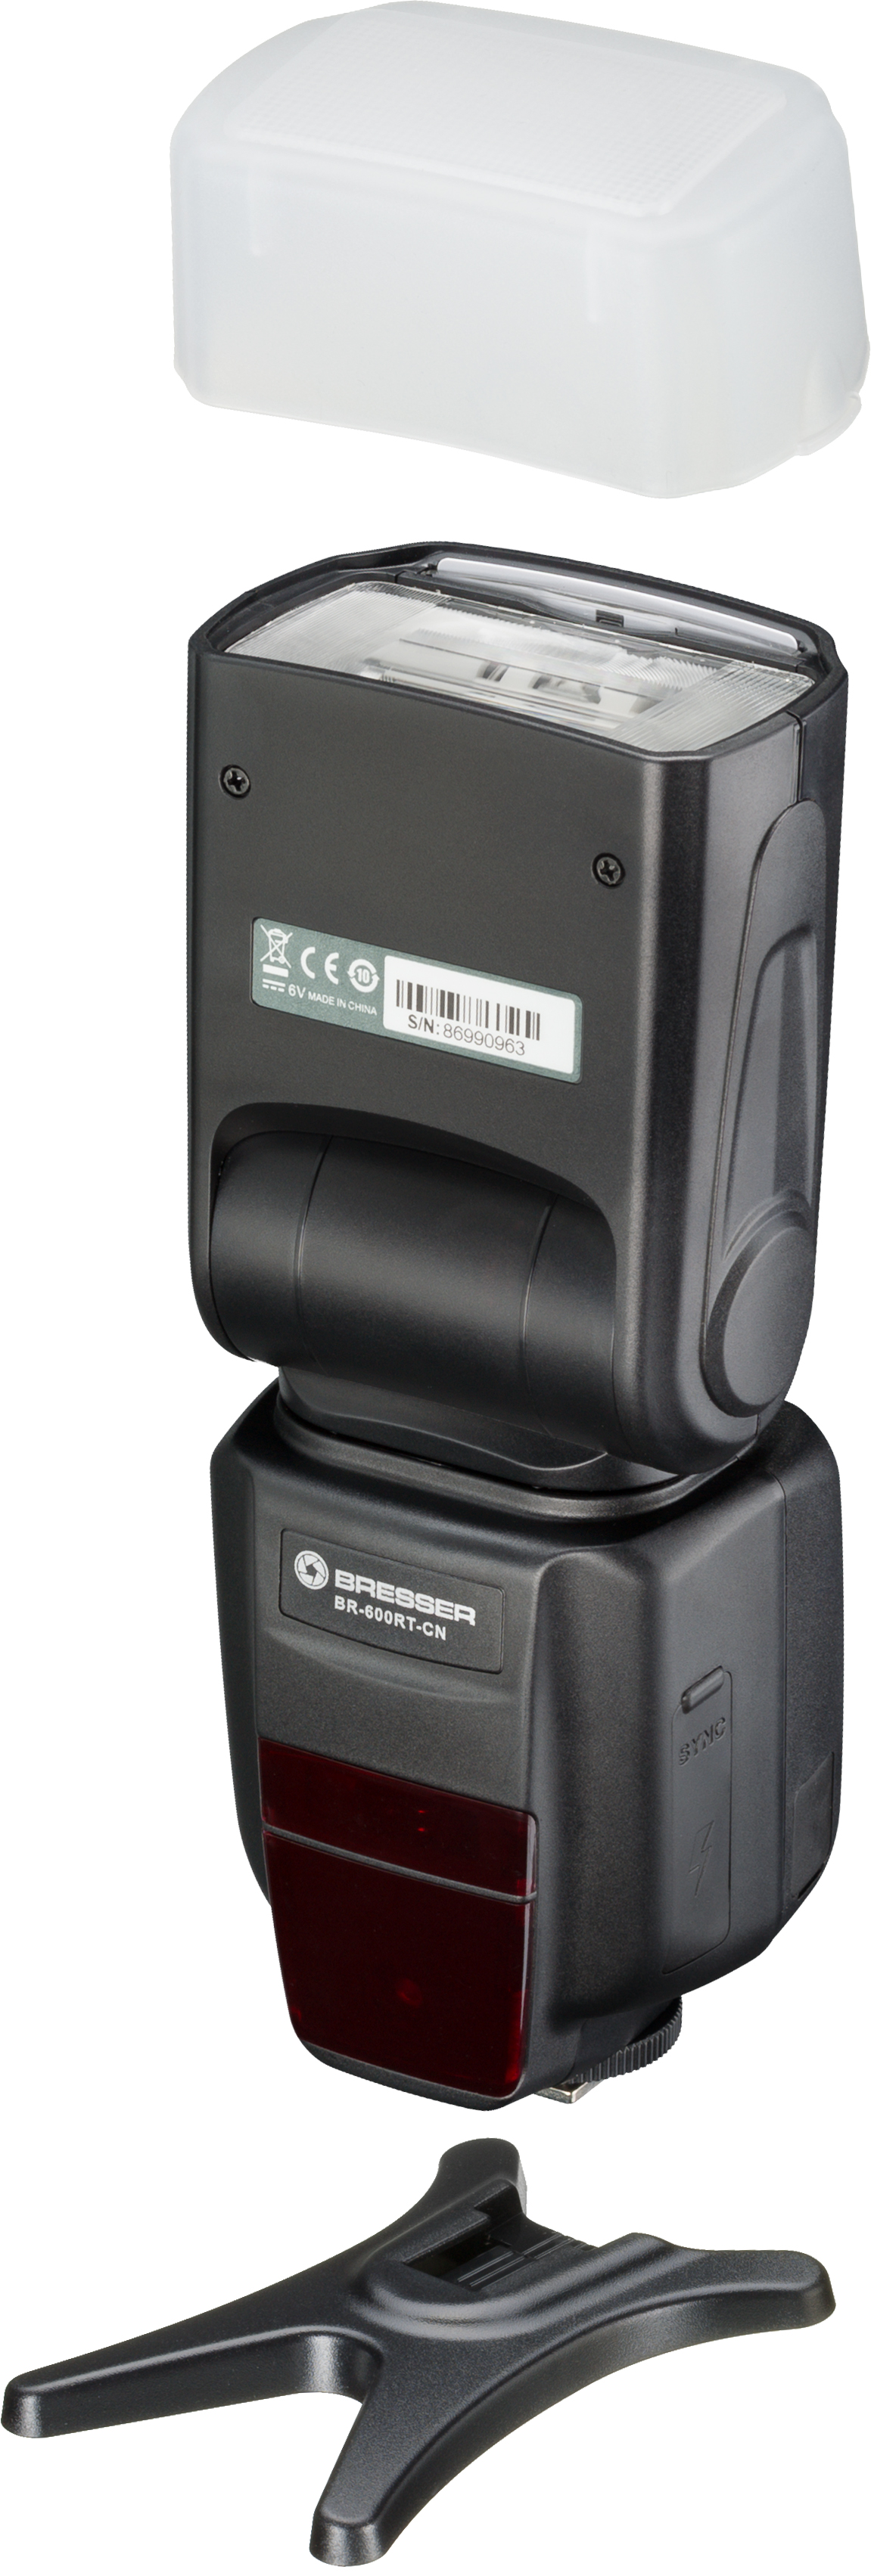 Flash compacto BRESSER BR-600RT-CN para Cámaras de Canon y Nikon